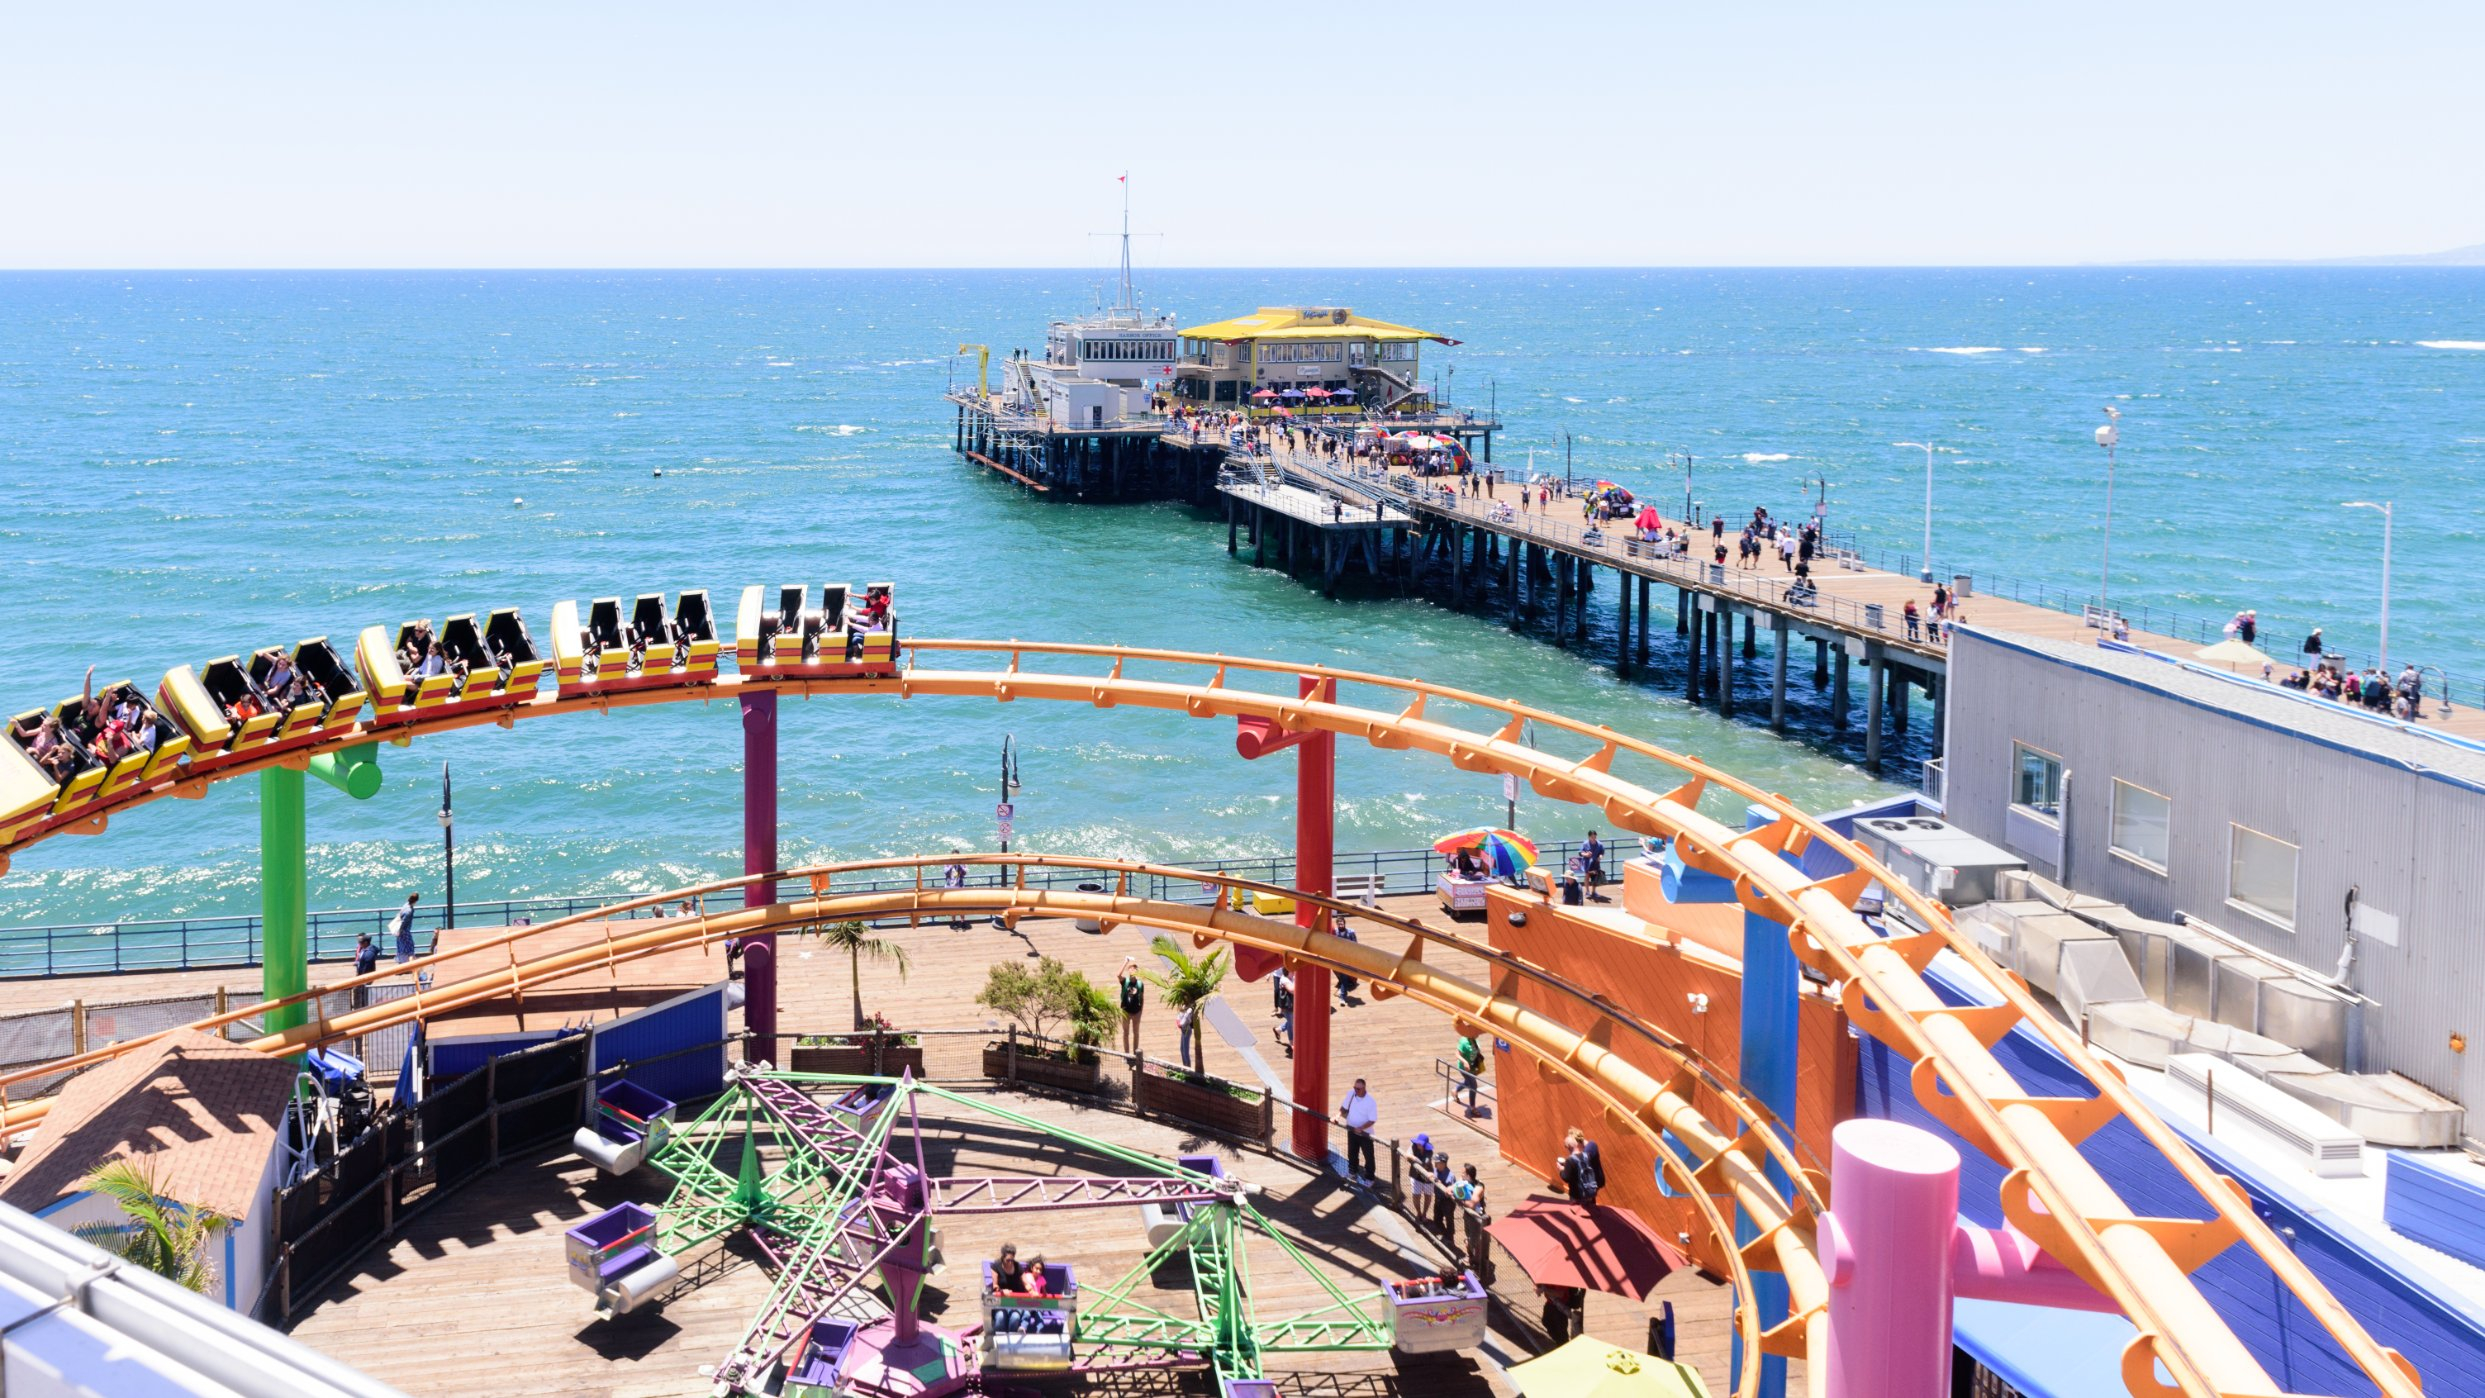 2485x1398 Beautiful Santa Monica Pier in colorful photos | CNN Travel